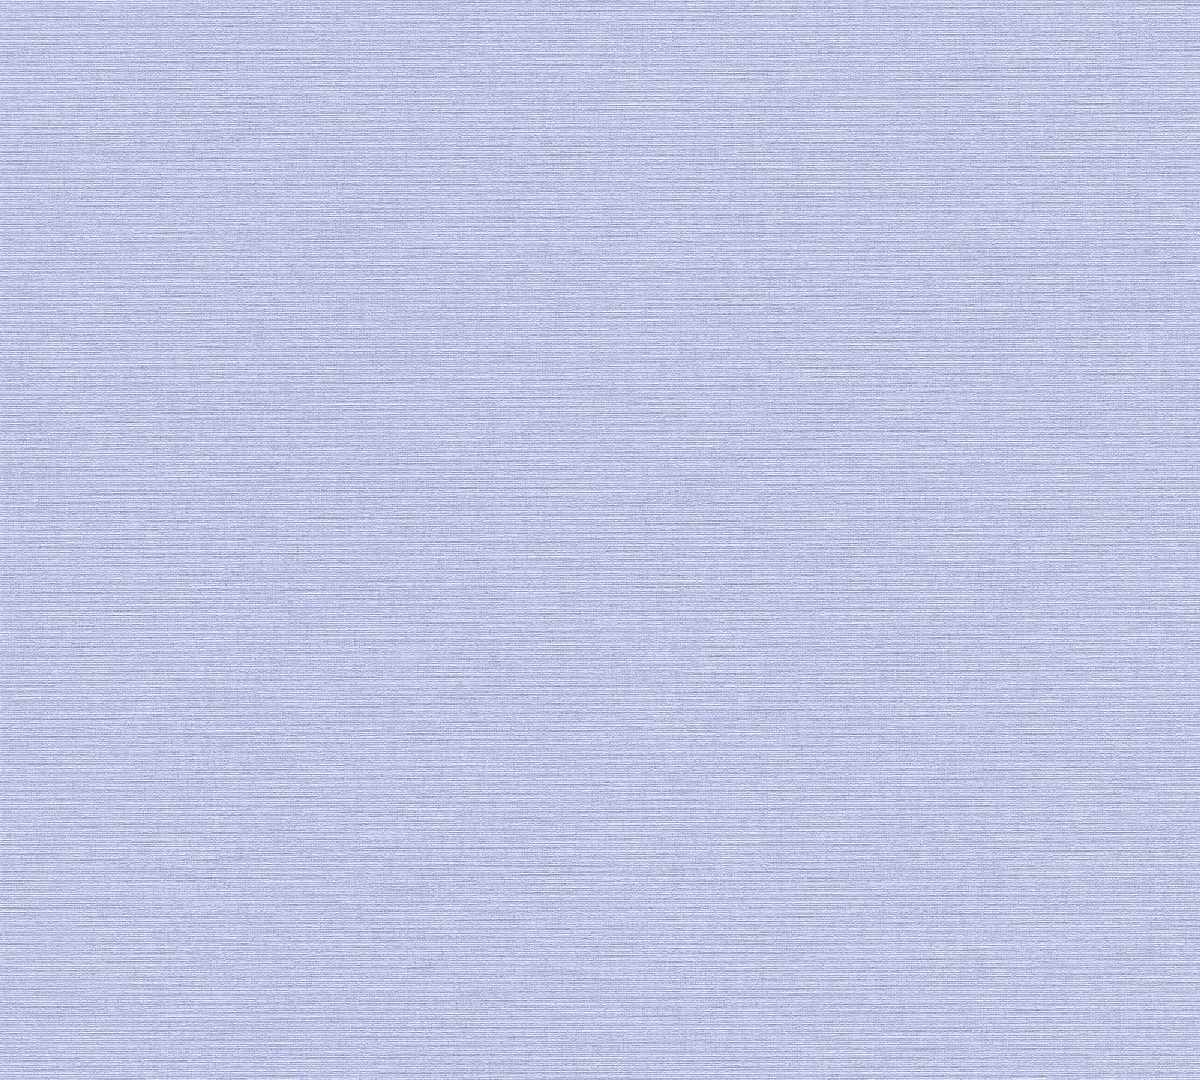 Vliestapete House of Turnowsky 389035 - einfarbige Tapete Muster - Blau, 